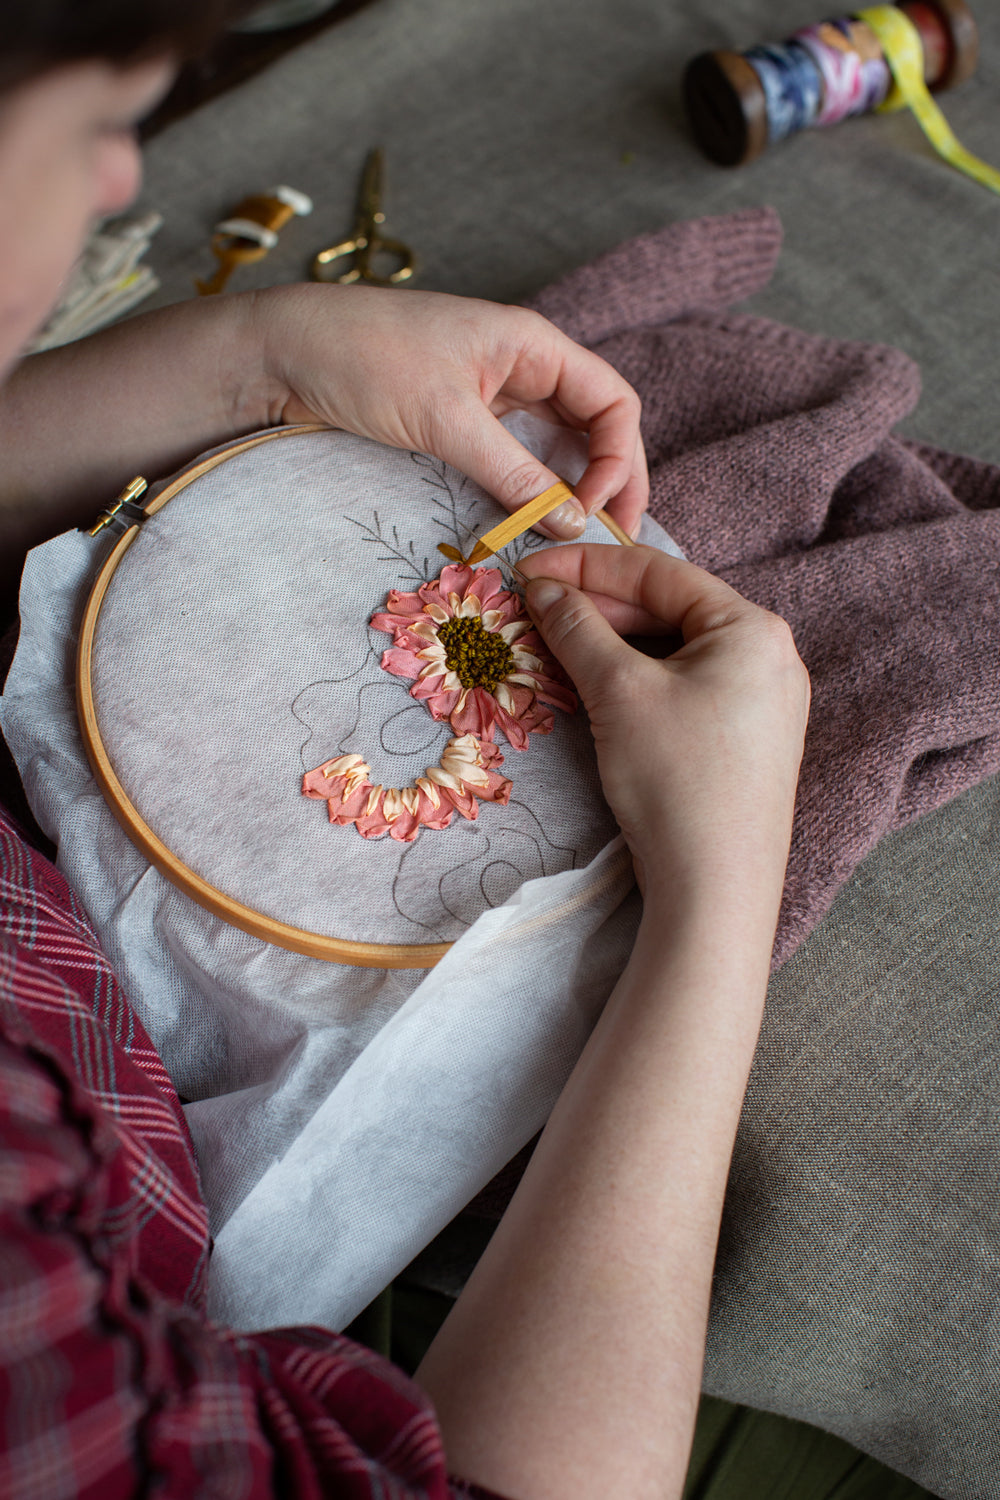 Embroidery on Knits, Judit Gummlich